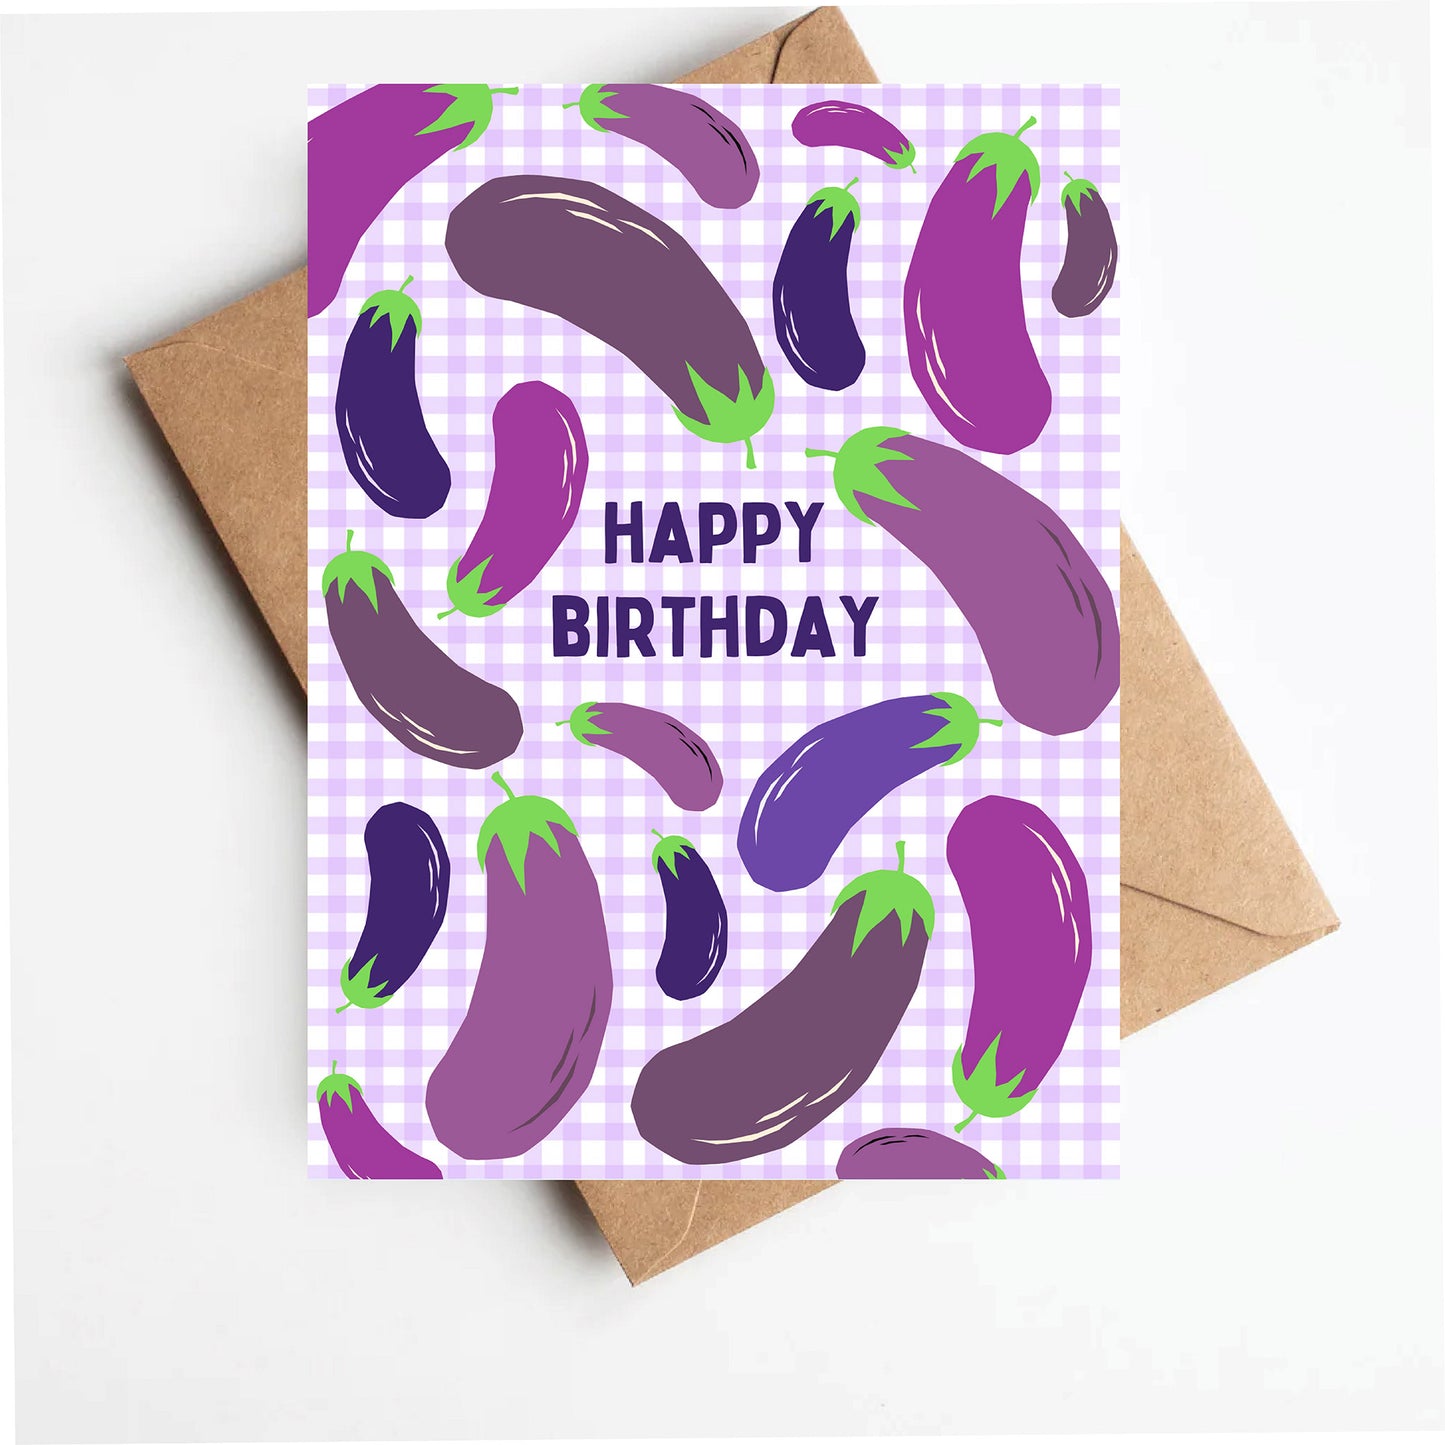 Eggplant birthday card